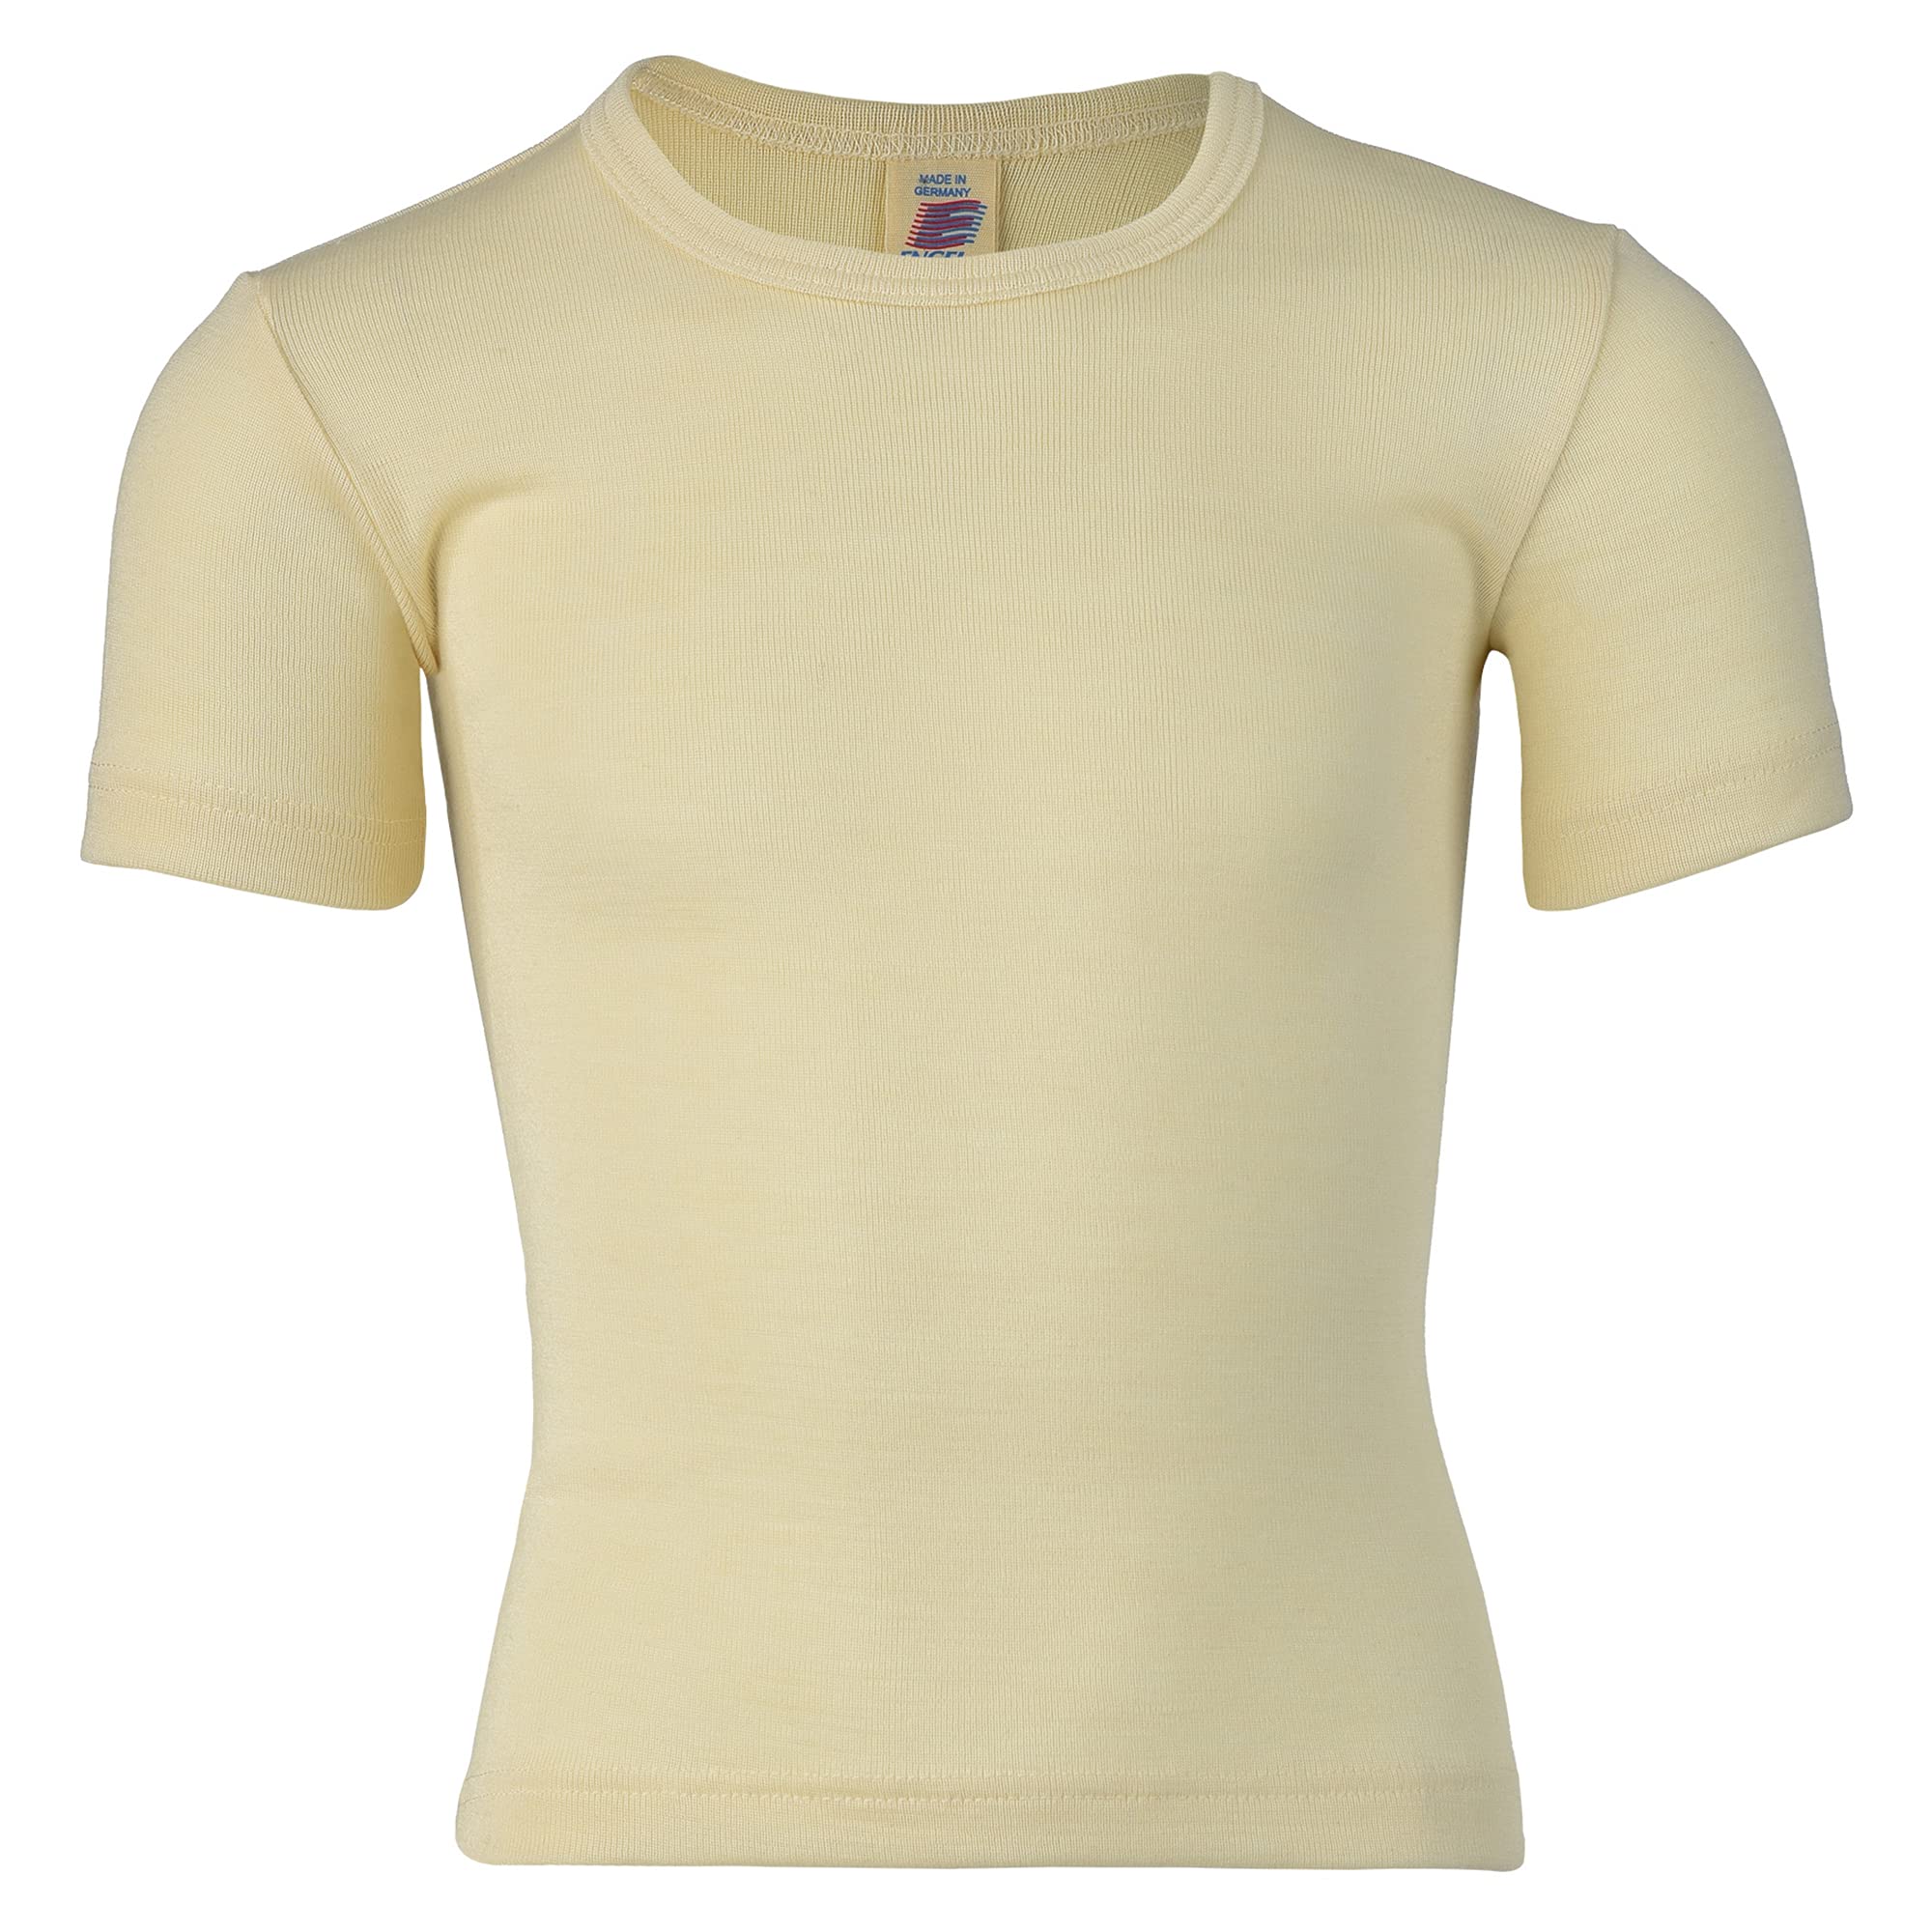 Kid's Short Sleeve Thermal Shirt: Warm and Thin Base Layer Top